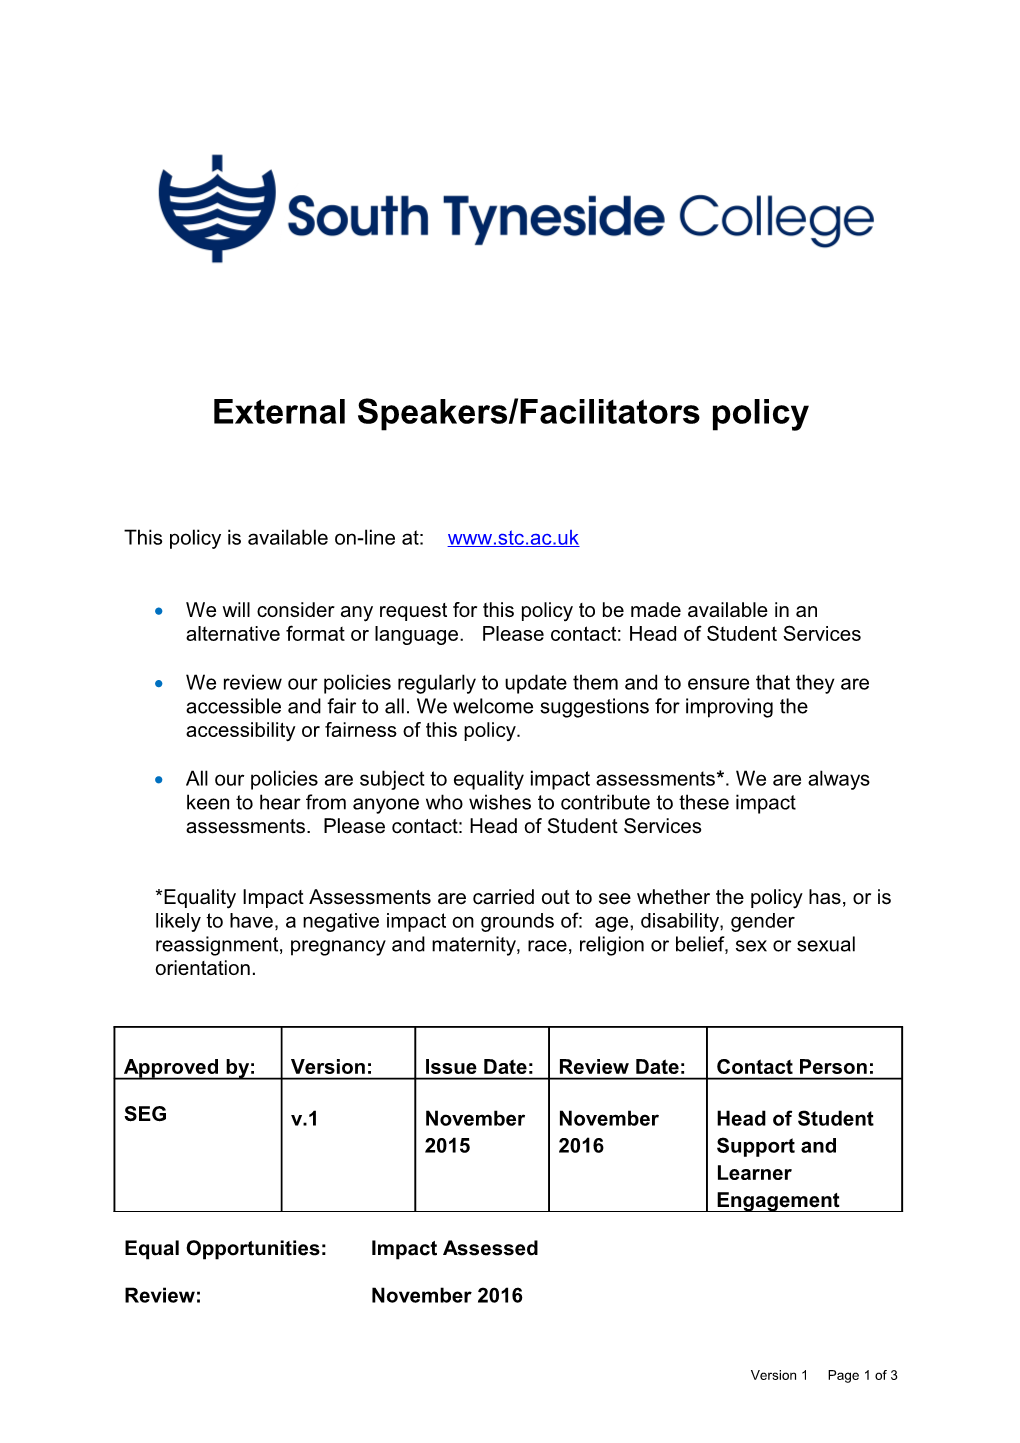 External Speakers/Facilitators Policy